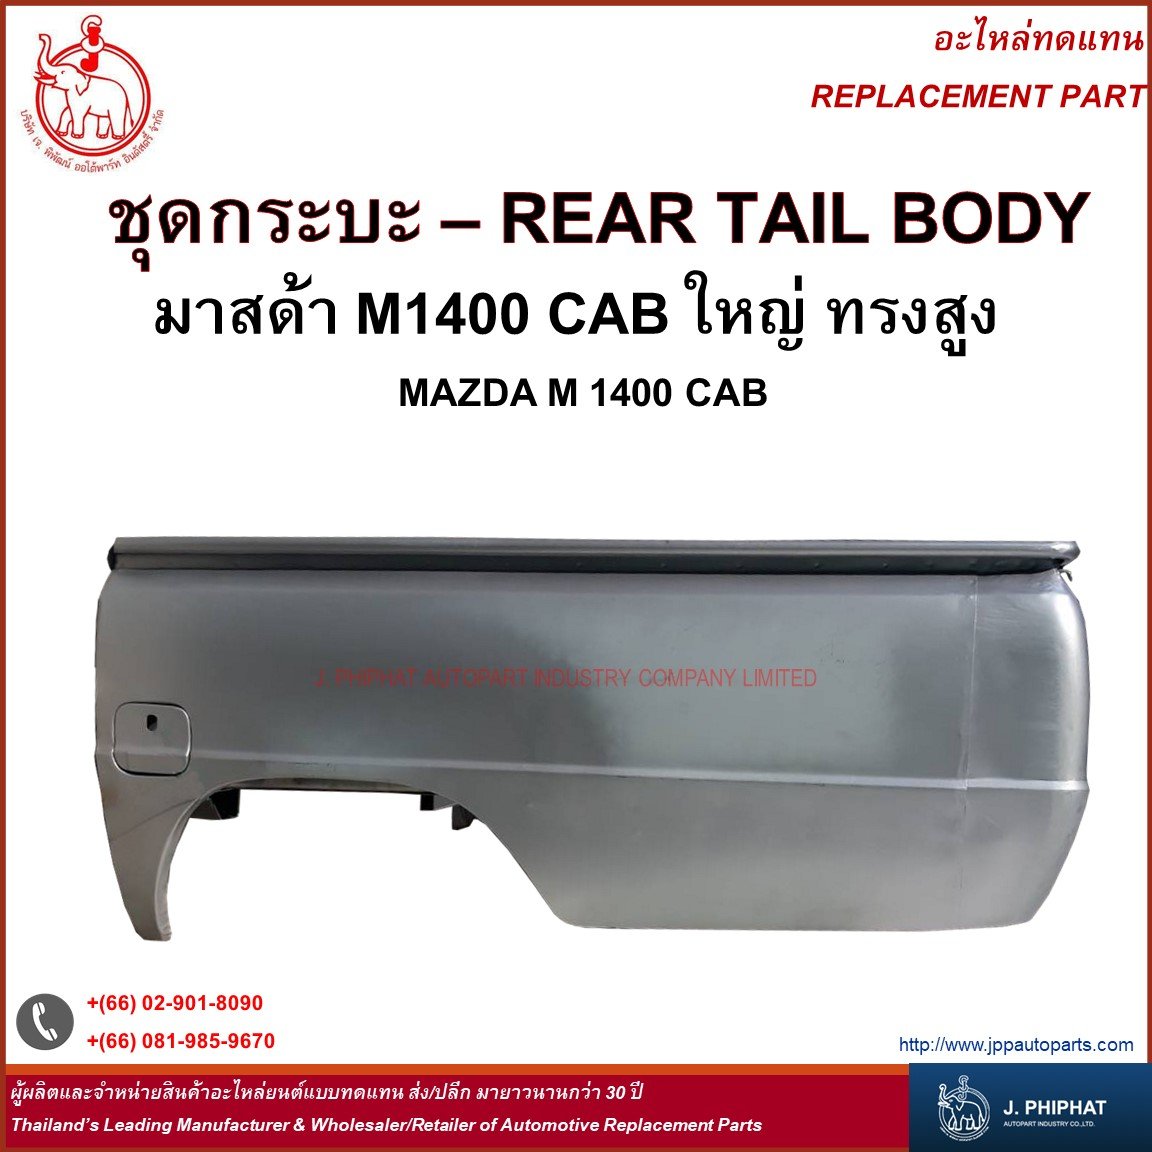 Rear Tail Body - Mazda M1400 CAB